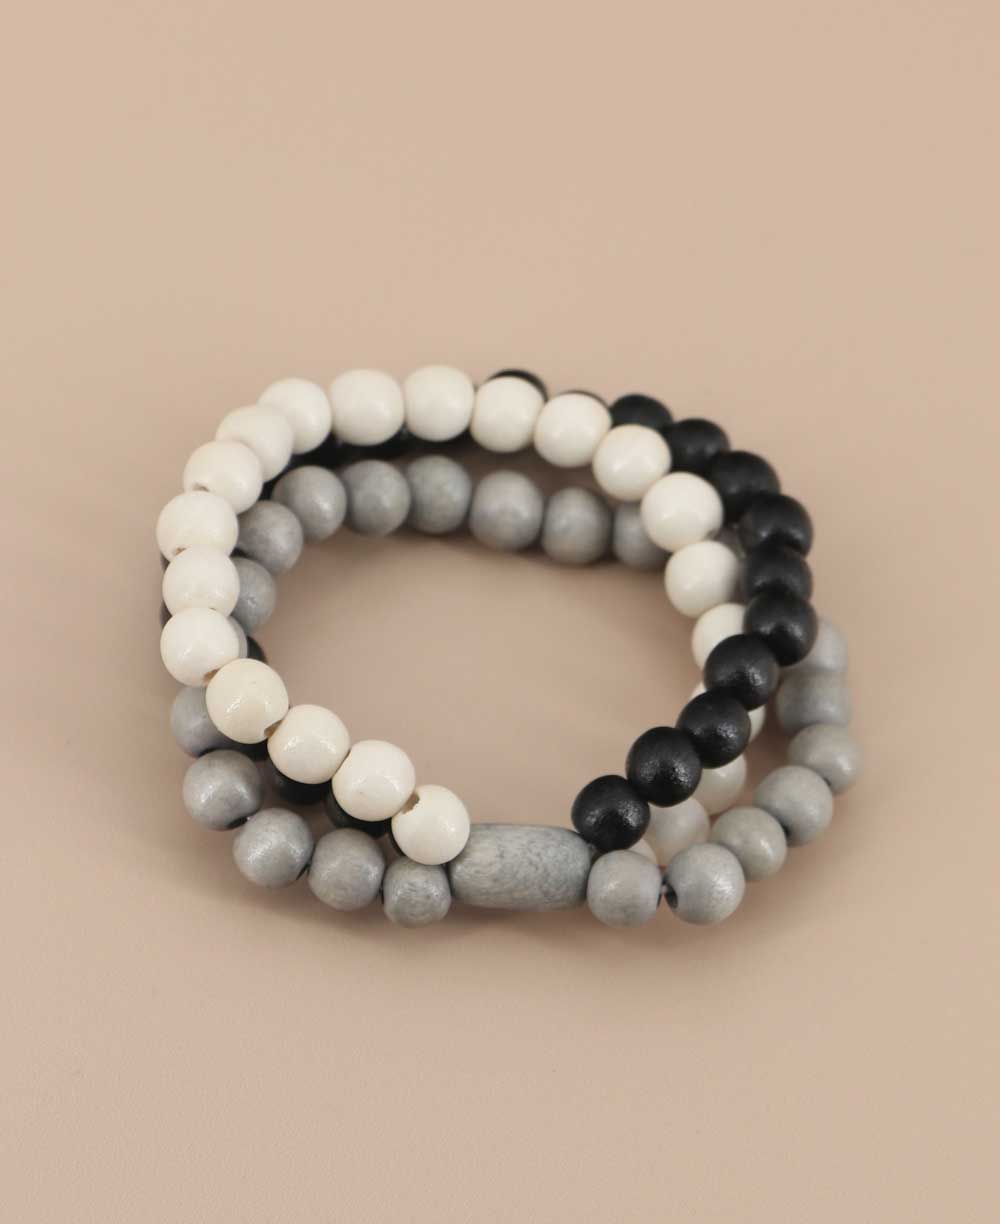 Grey, white, and black bead bracelet